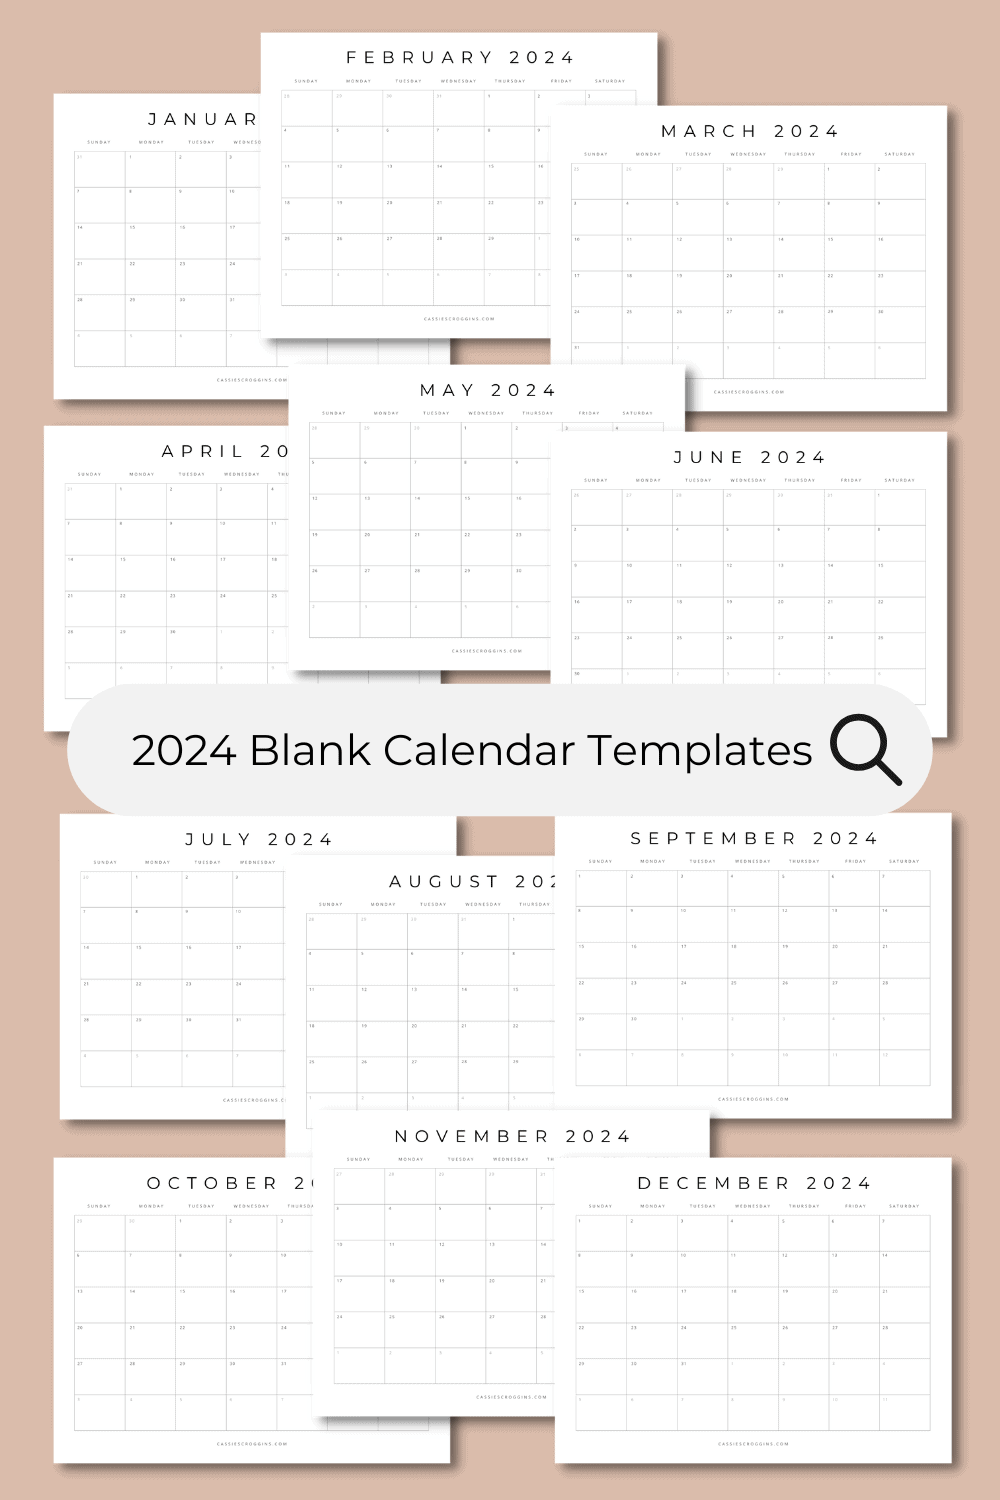 Free Printable 2024 Blank Calendar Templates (All 12 Months) for Printable Budget Calendar 2024